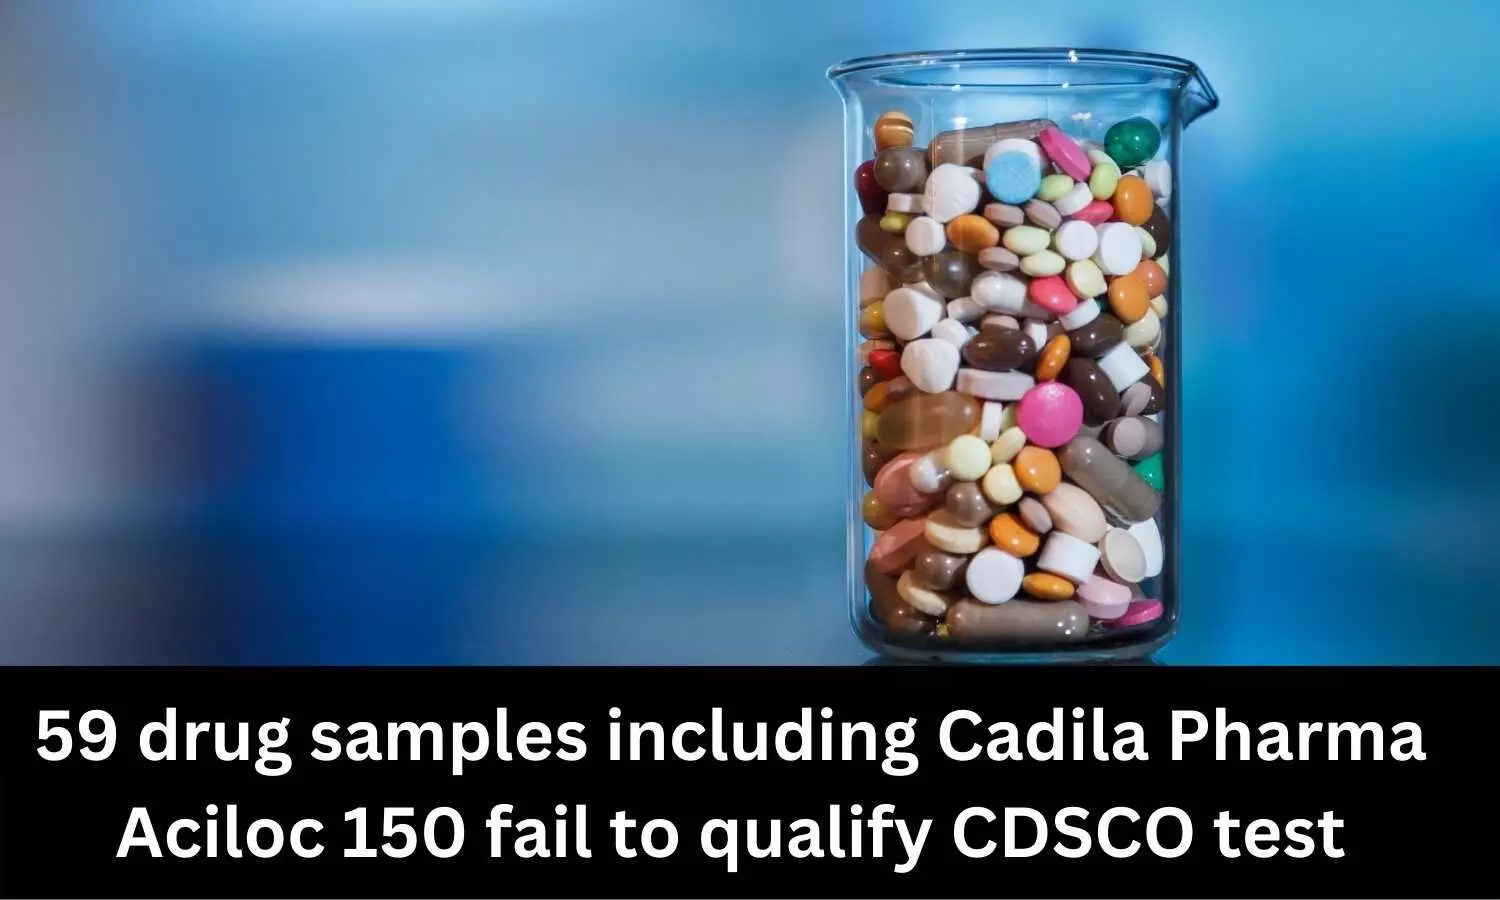 59 drug samples including Cadila Pharma Aciloc 150 fail to qualify CDSCO test